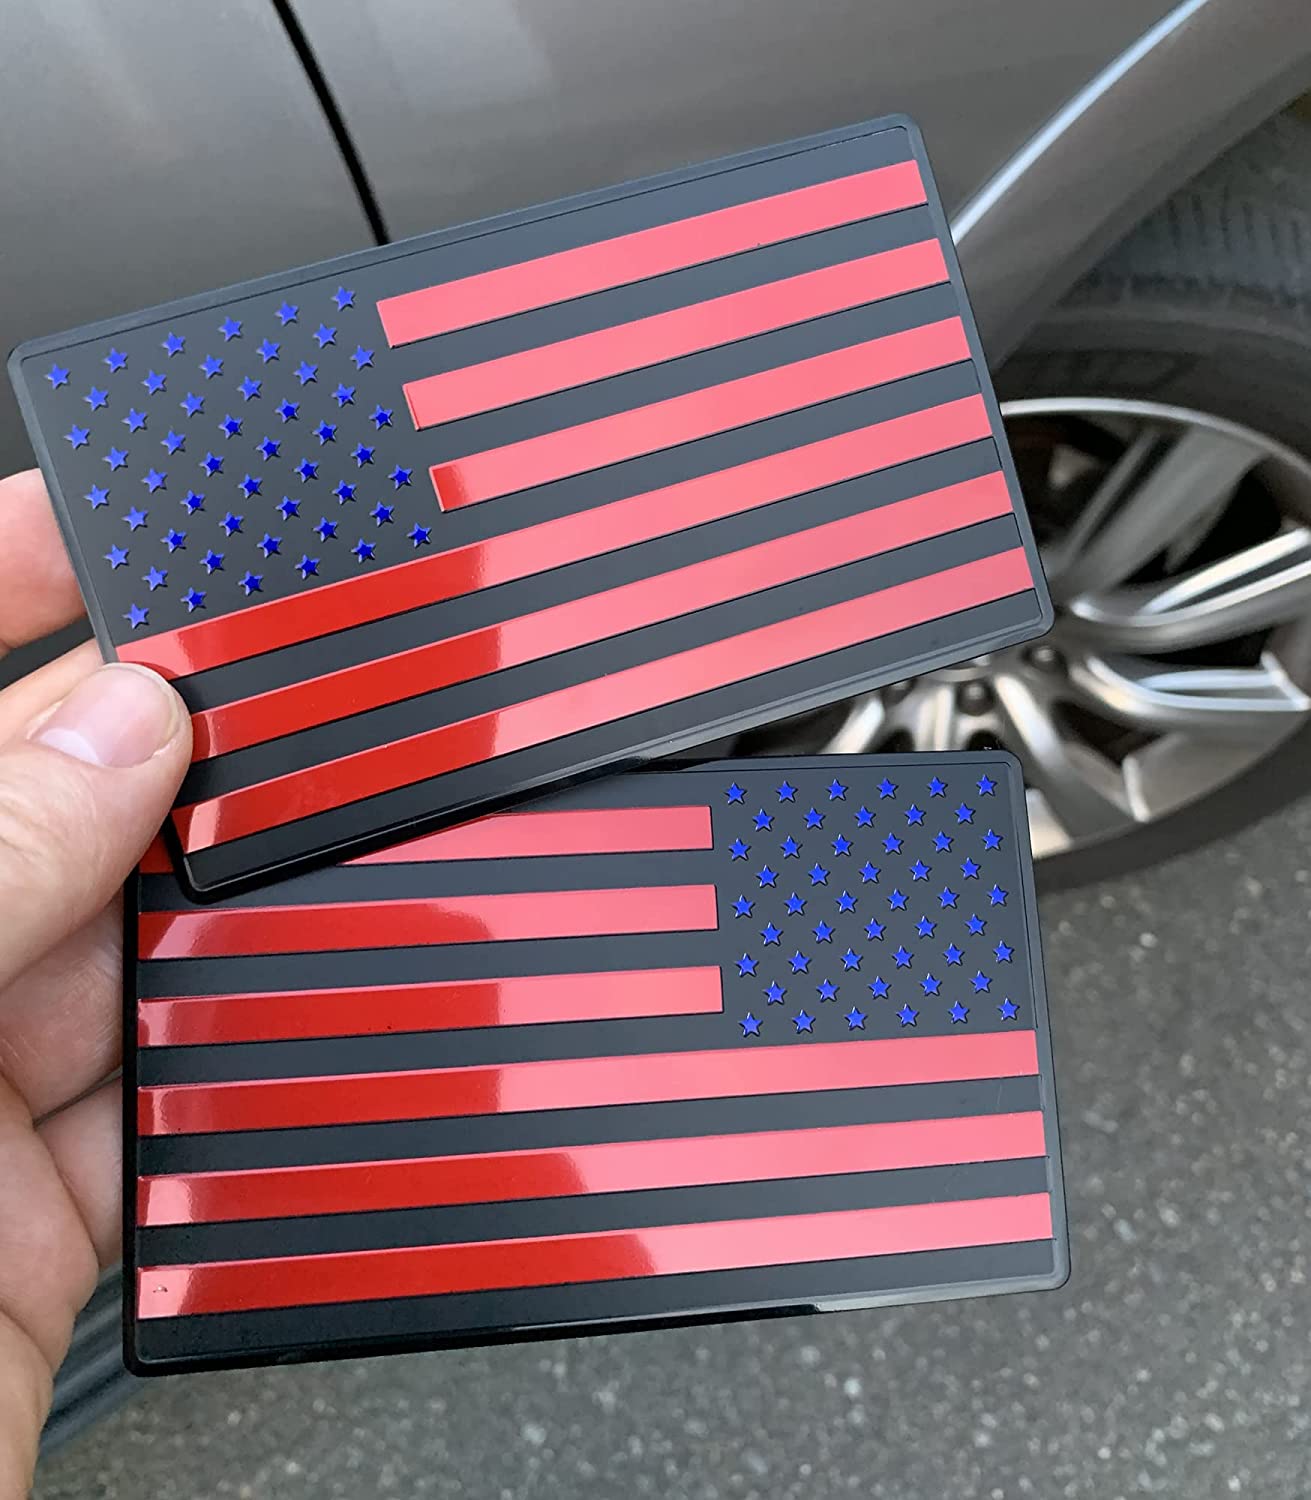 USA American 3D Metal Flag Auto Emblem for Cars Trucks 2pcs Forward and Reverse Set (5"x3", Black Red Blue)